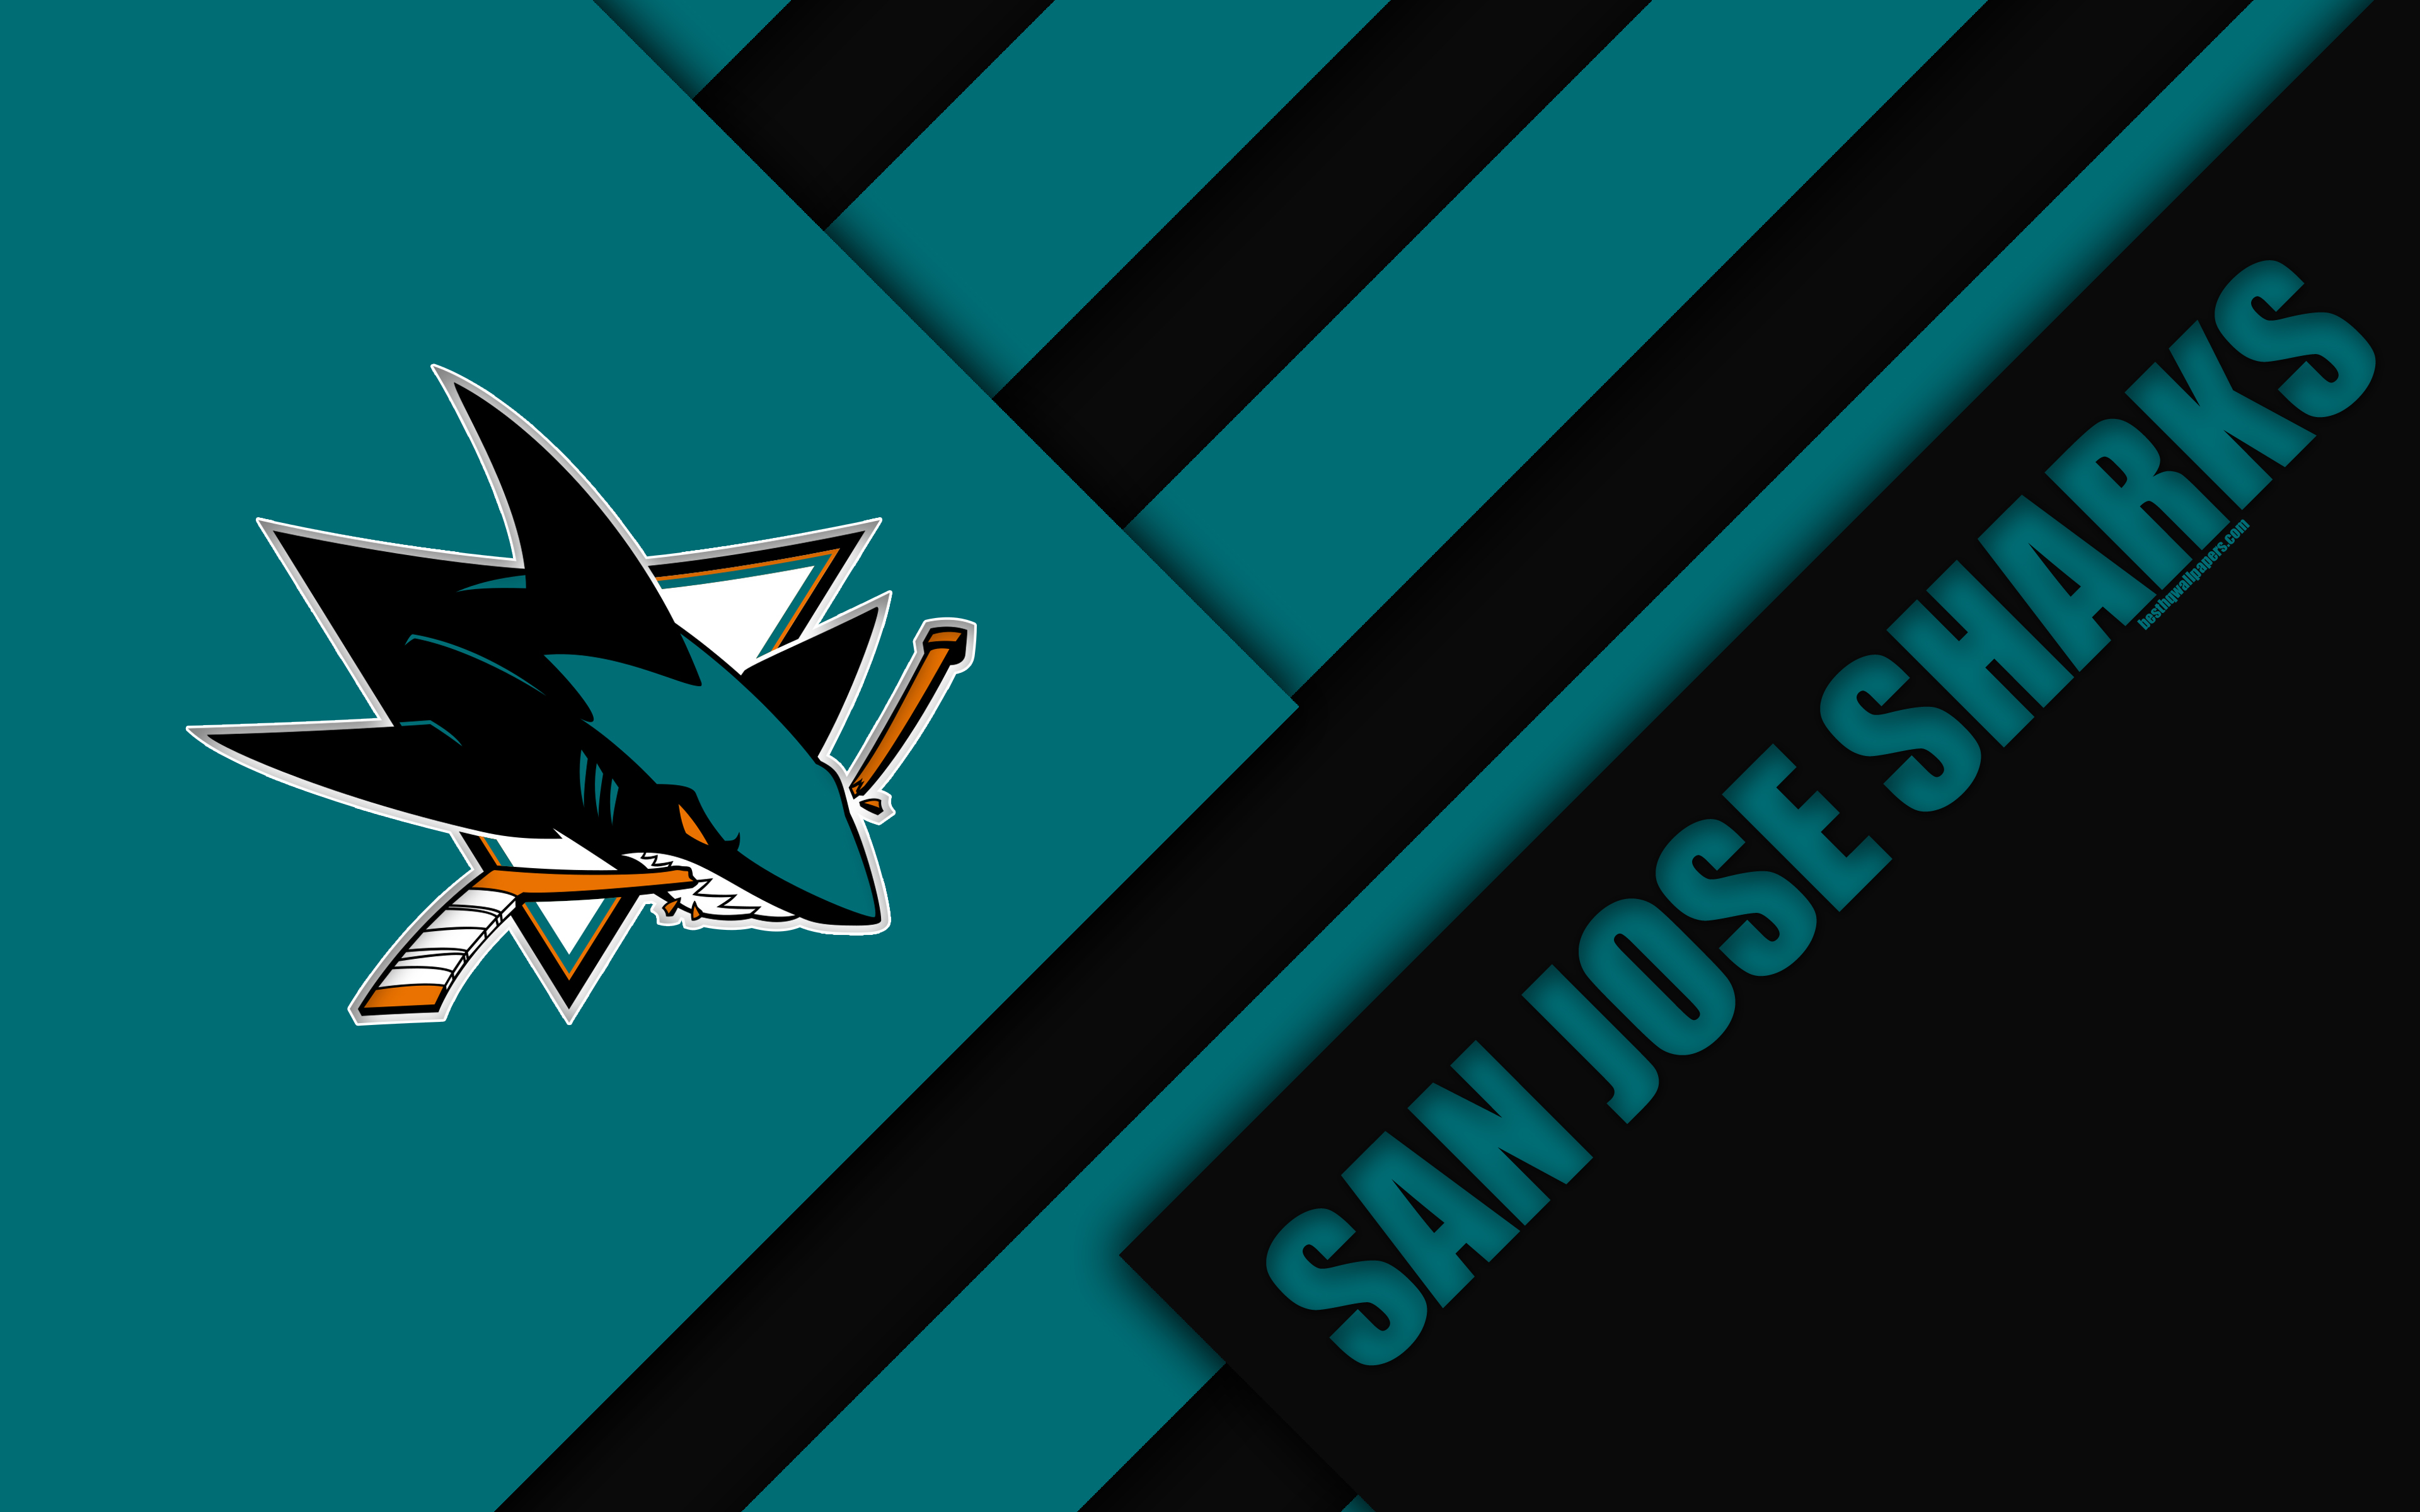 Download wallpapers San Jose Sharks NHL 4k material design